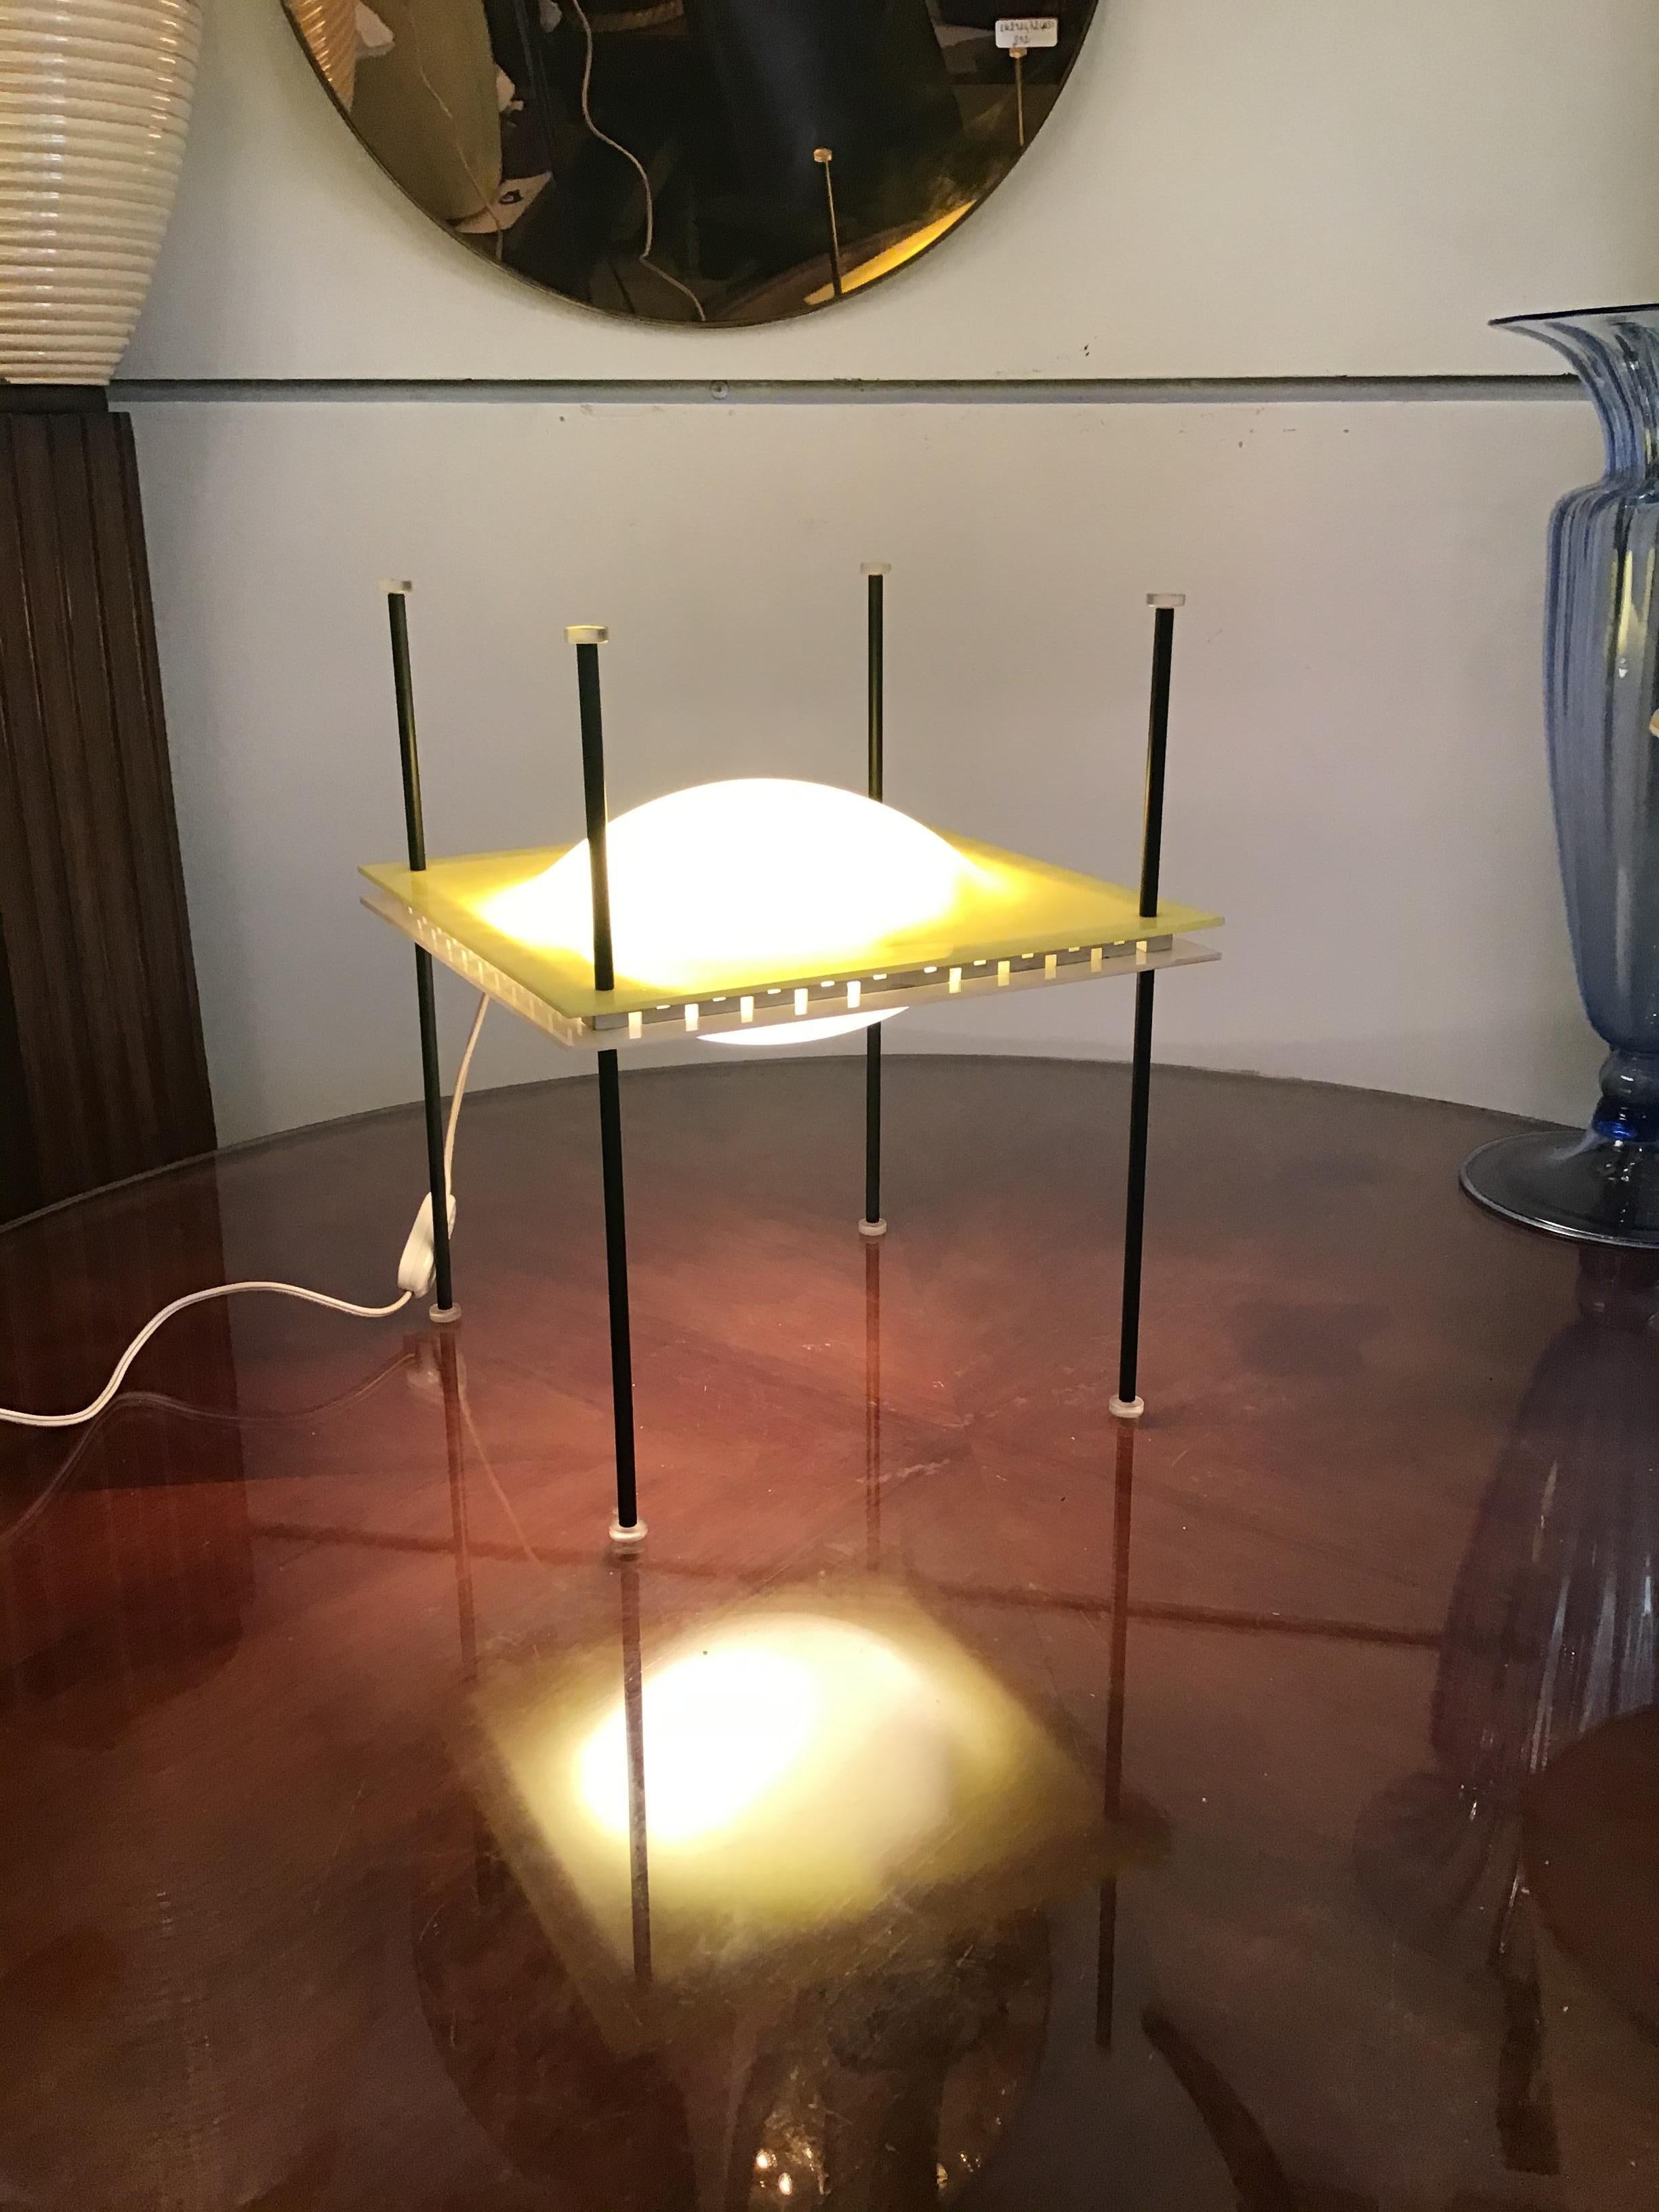 Ettore Sottsass “Palafitta“ table lamp brass plexiglas 1957 Italy.